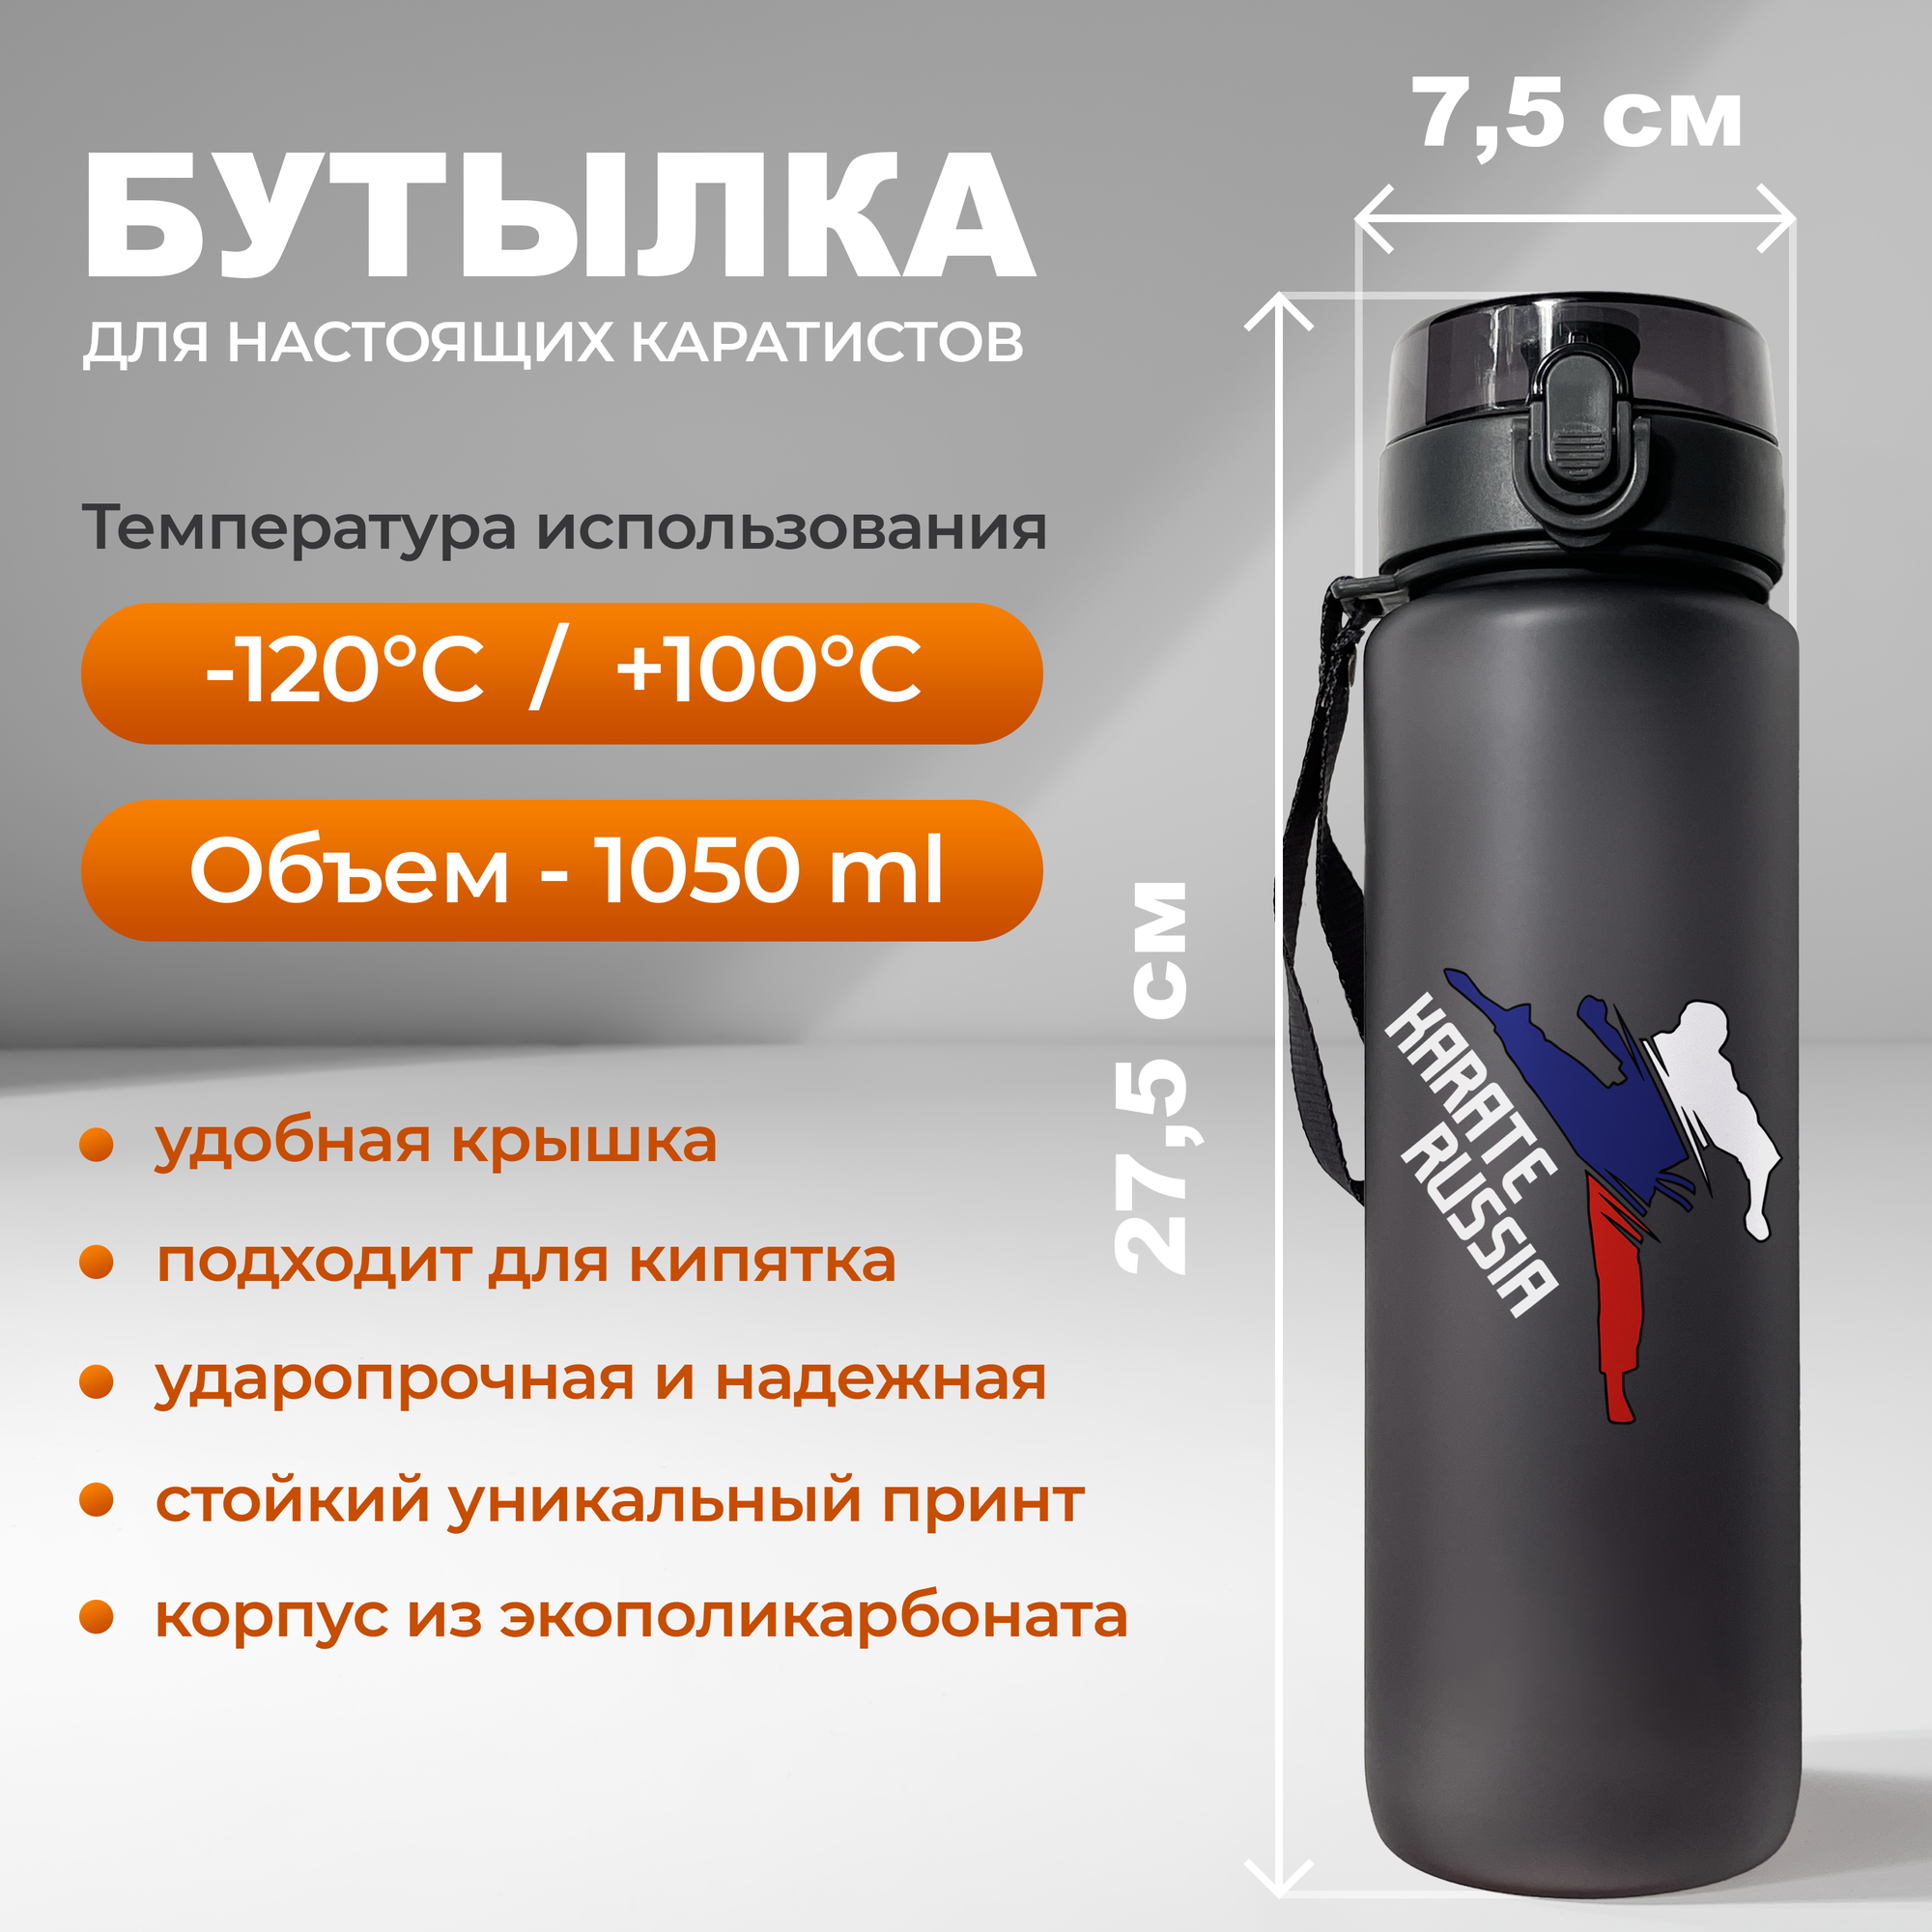 Спортивная бутылка Aika для настоящих каратистов триколор Карате RUSSIA объемом 1050 мл, черного цвета